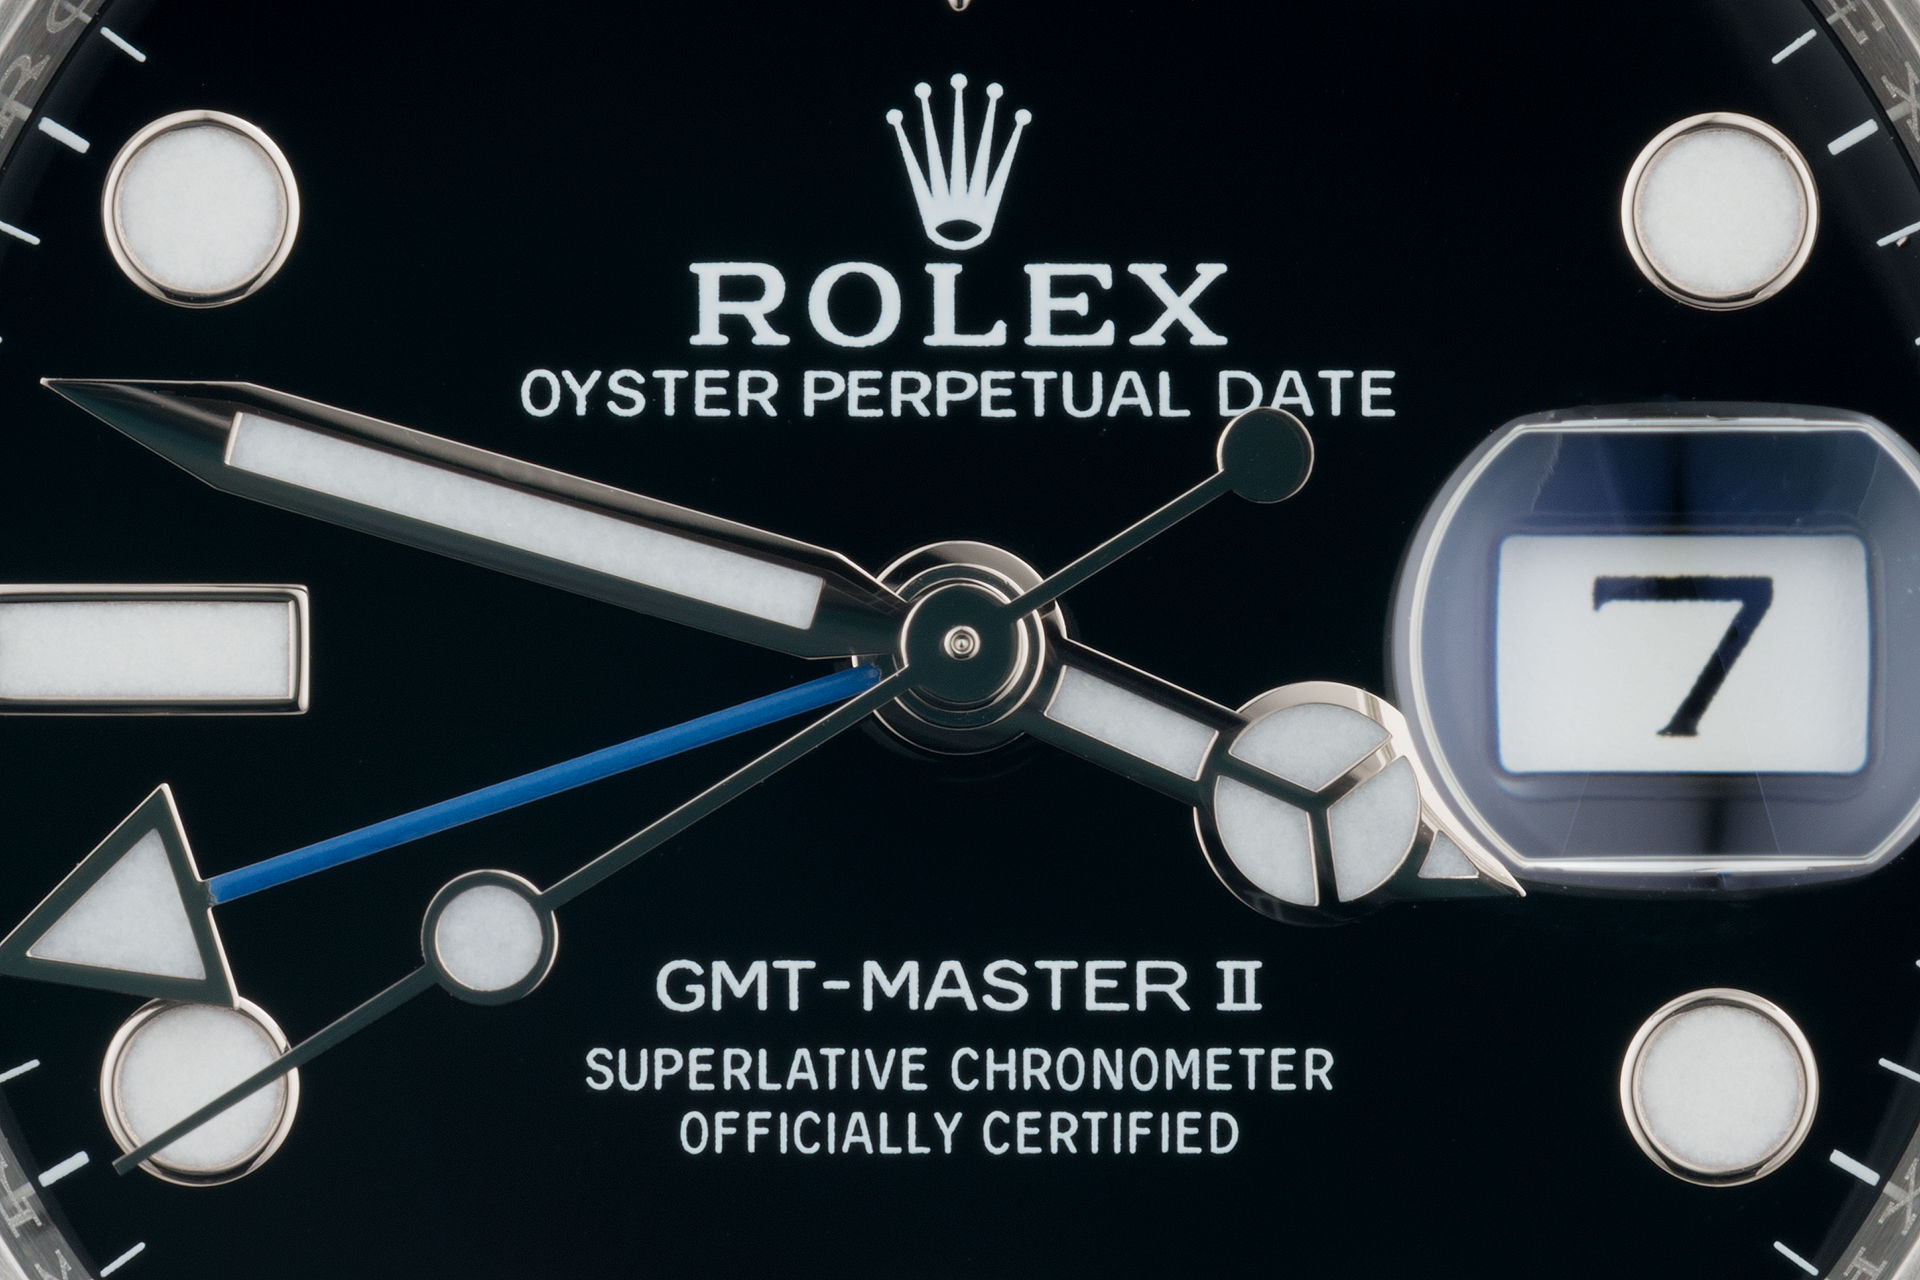 ref 116710BLNR | 5 Year Rolex Warranty | Rolex GMT-Master II